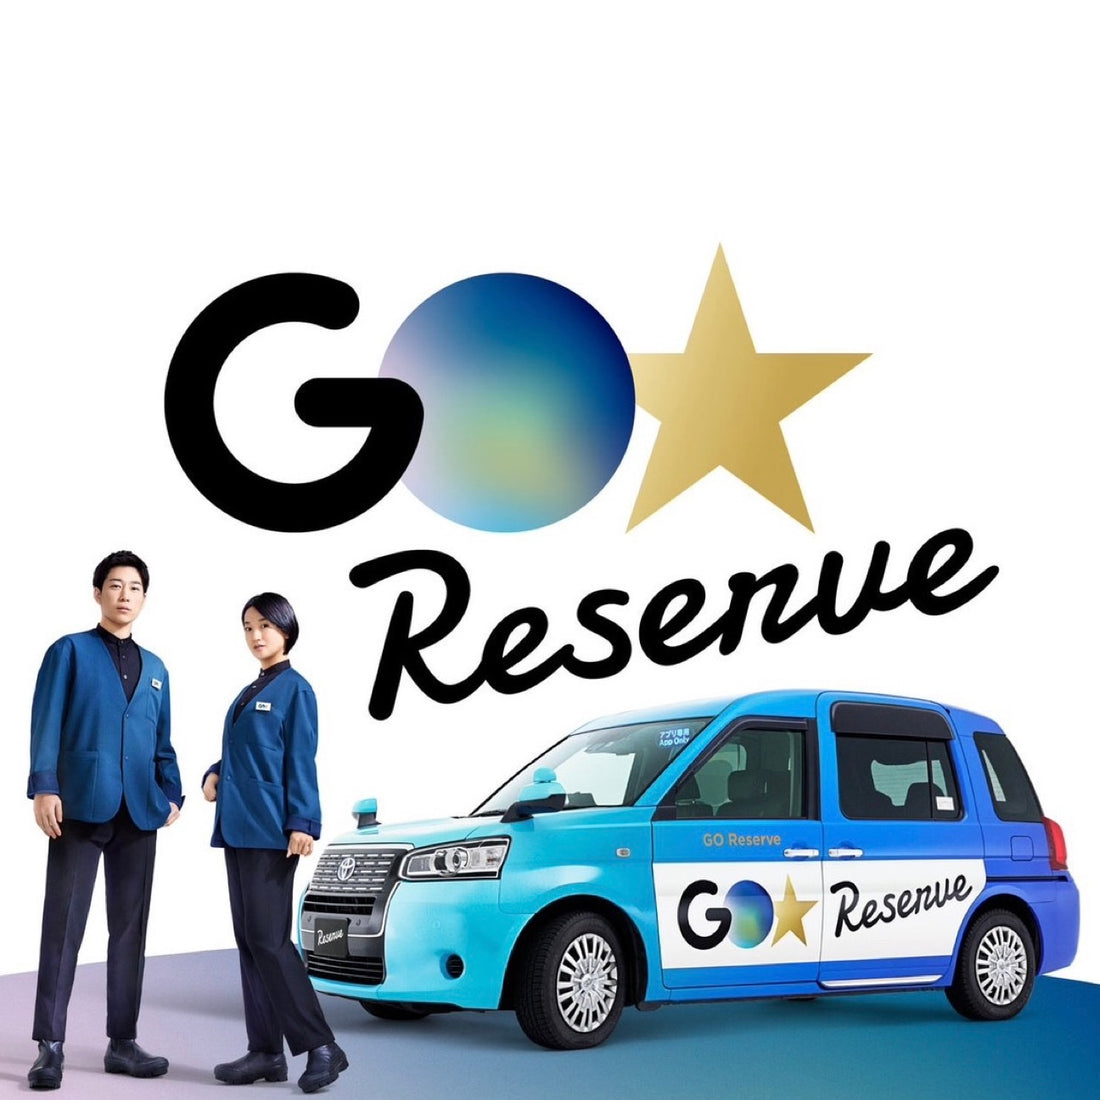 GO Reserve